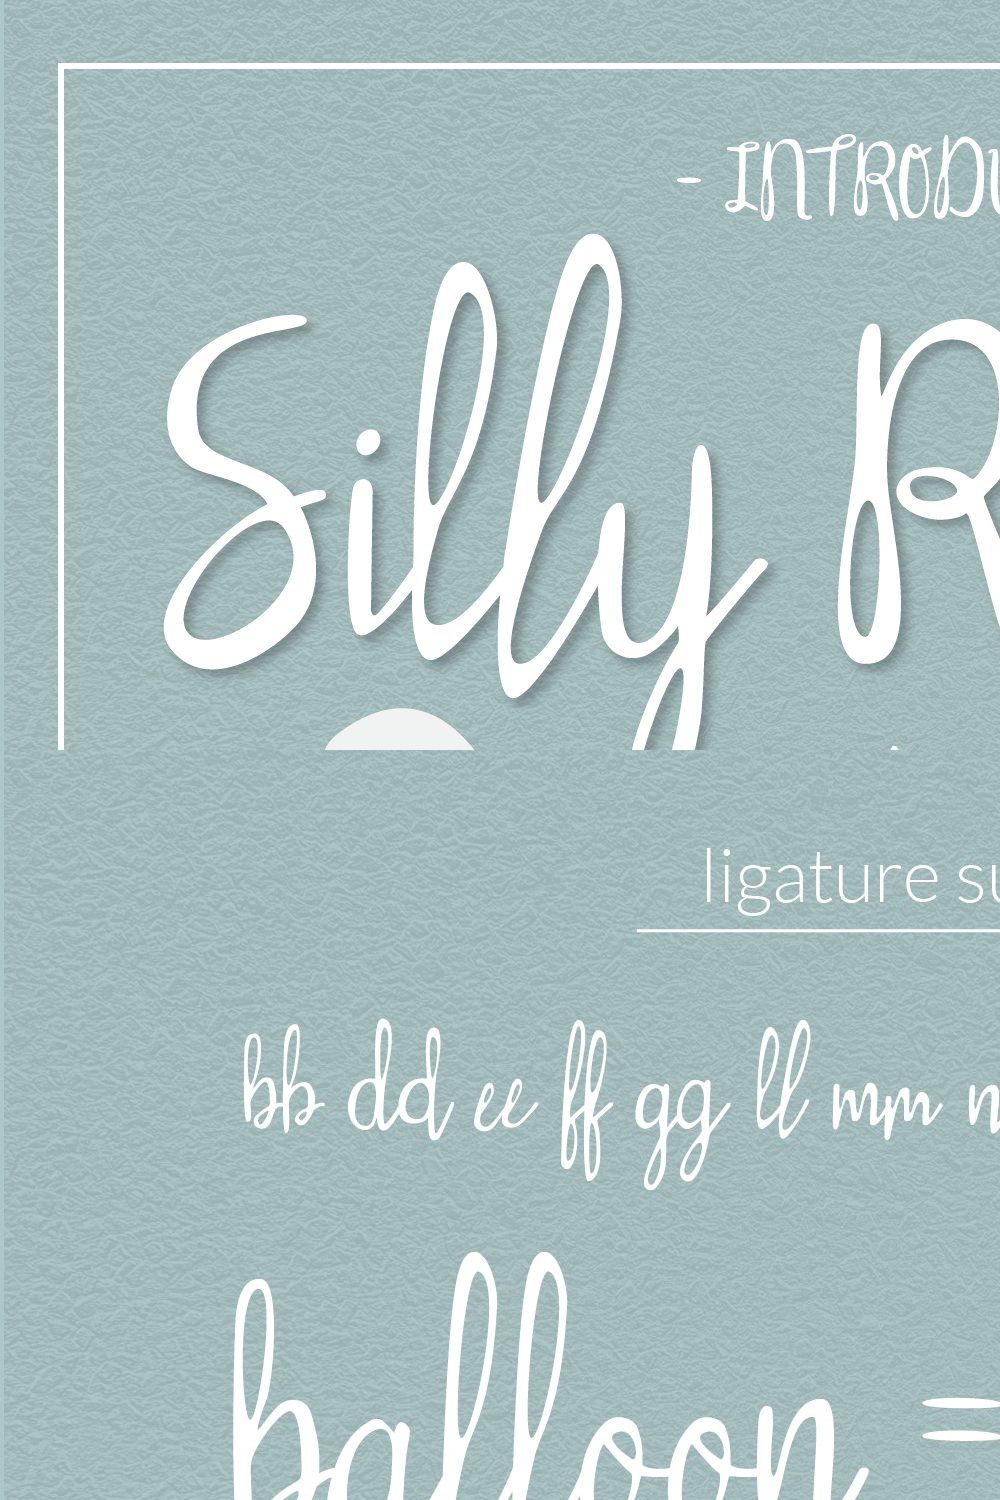 Silly Rabbit Script Font pinterest preview image.